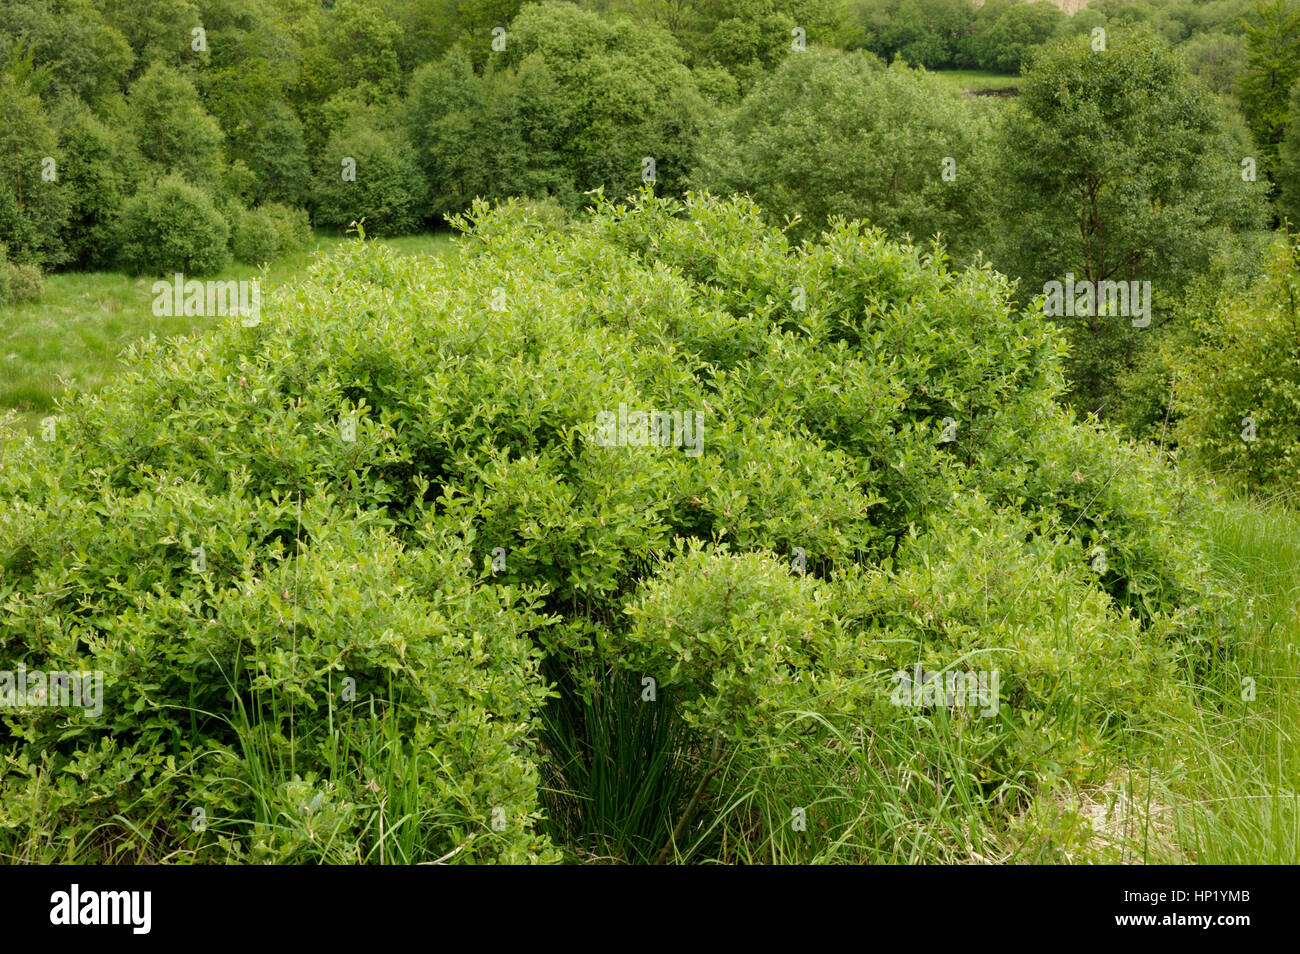 Eared Willow, Salix aurita Stock Photo